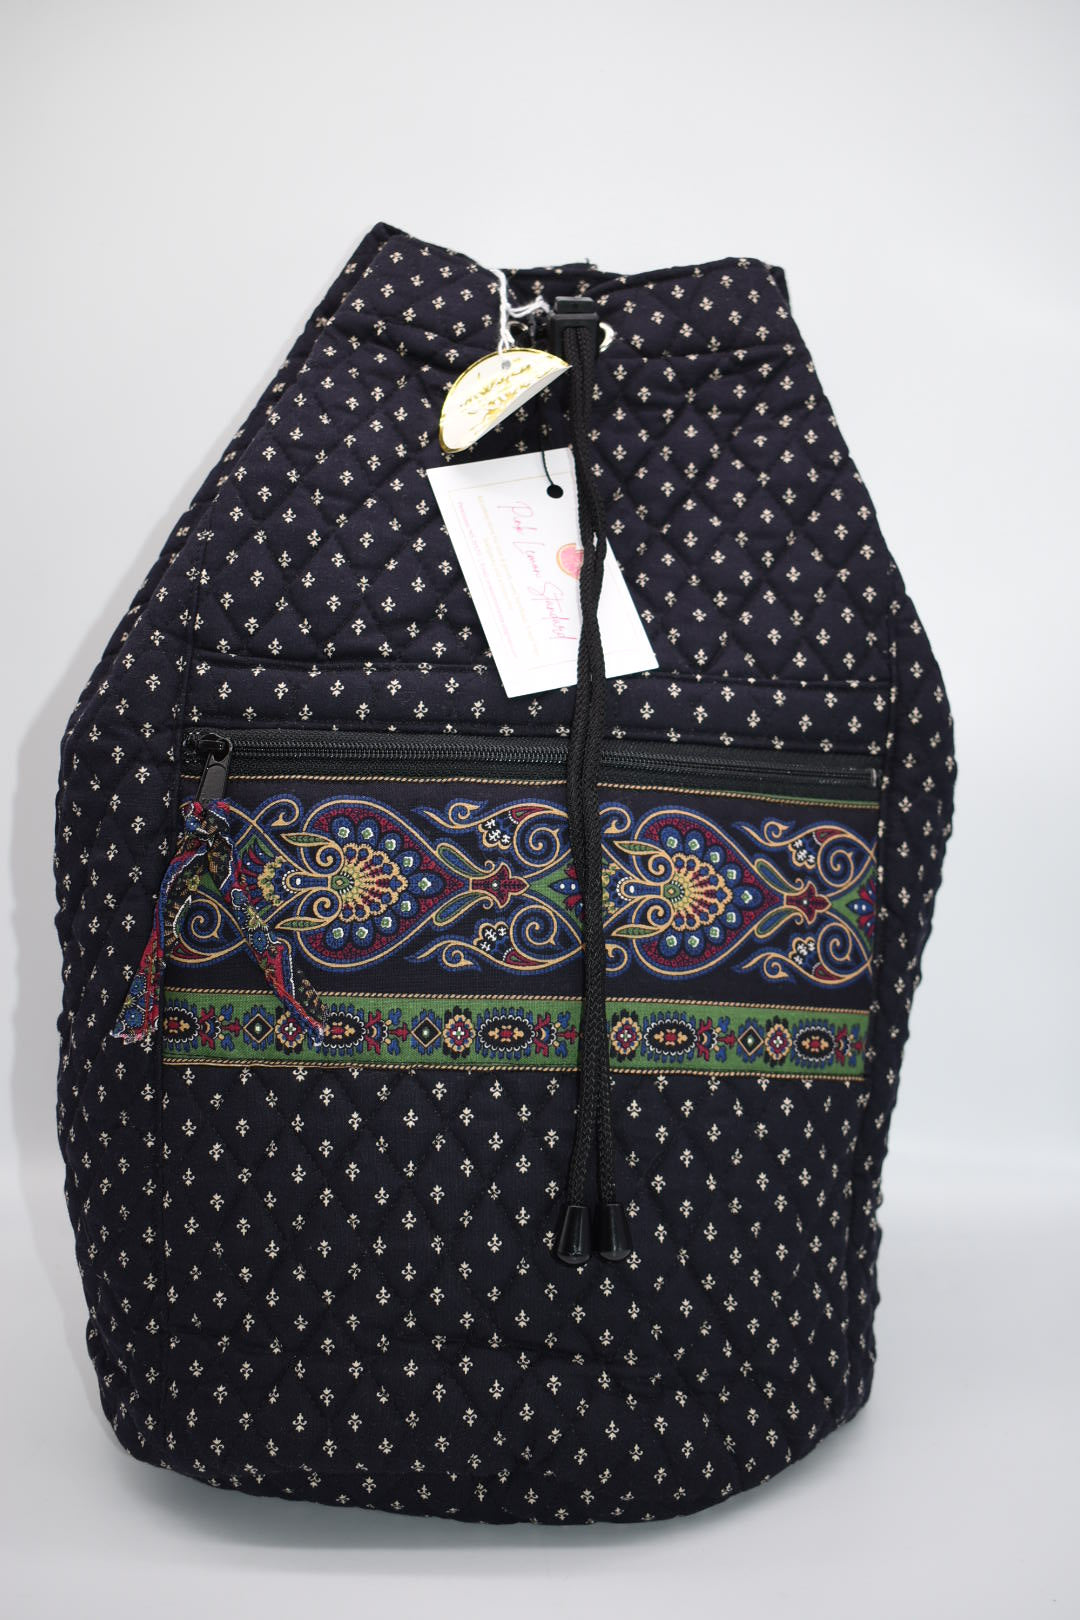 Vintage Vera Bradley Large Sling Bag in "Black - 1990" Pattern